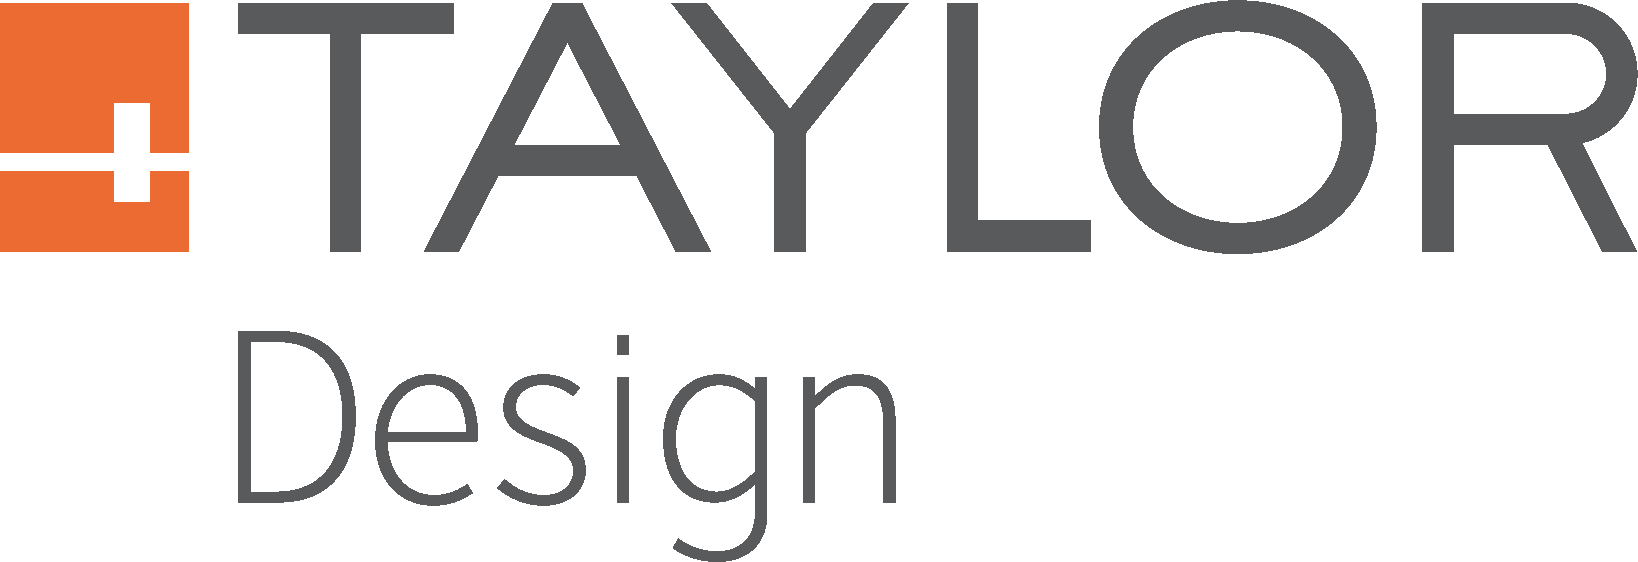 The Taylor Logo - Taylor Design - Architecture, Interior Design, Design Strategy